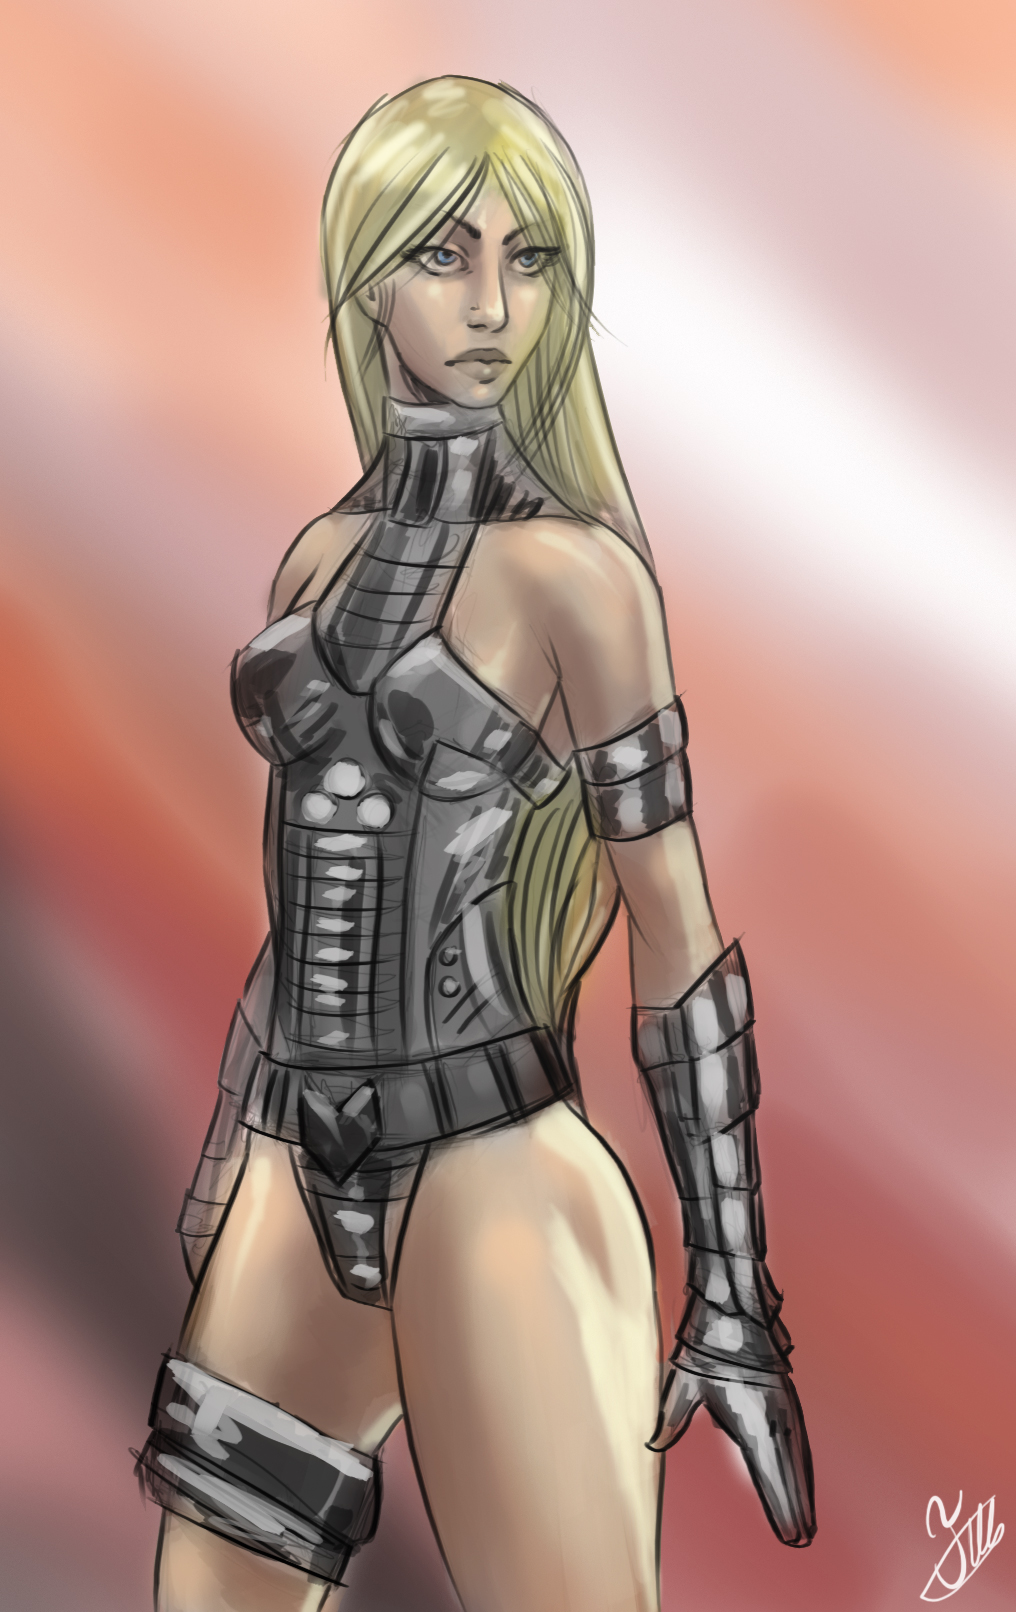 Armored girl